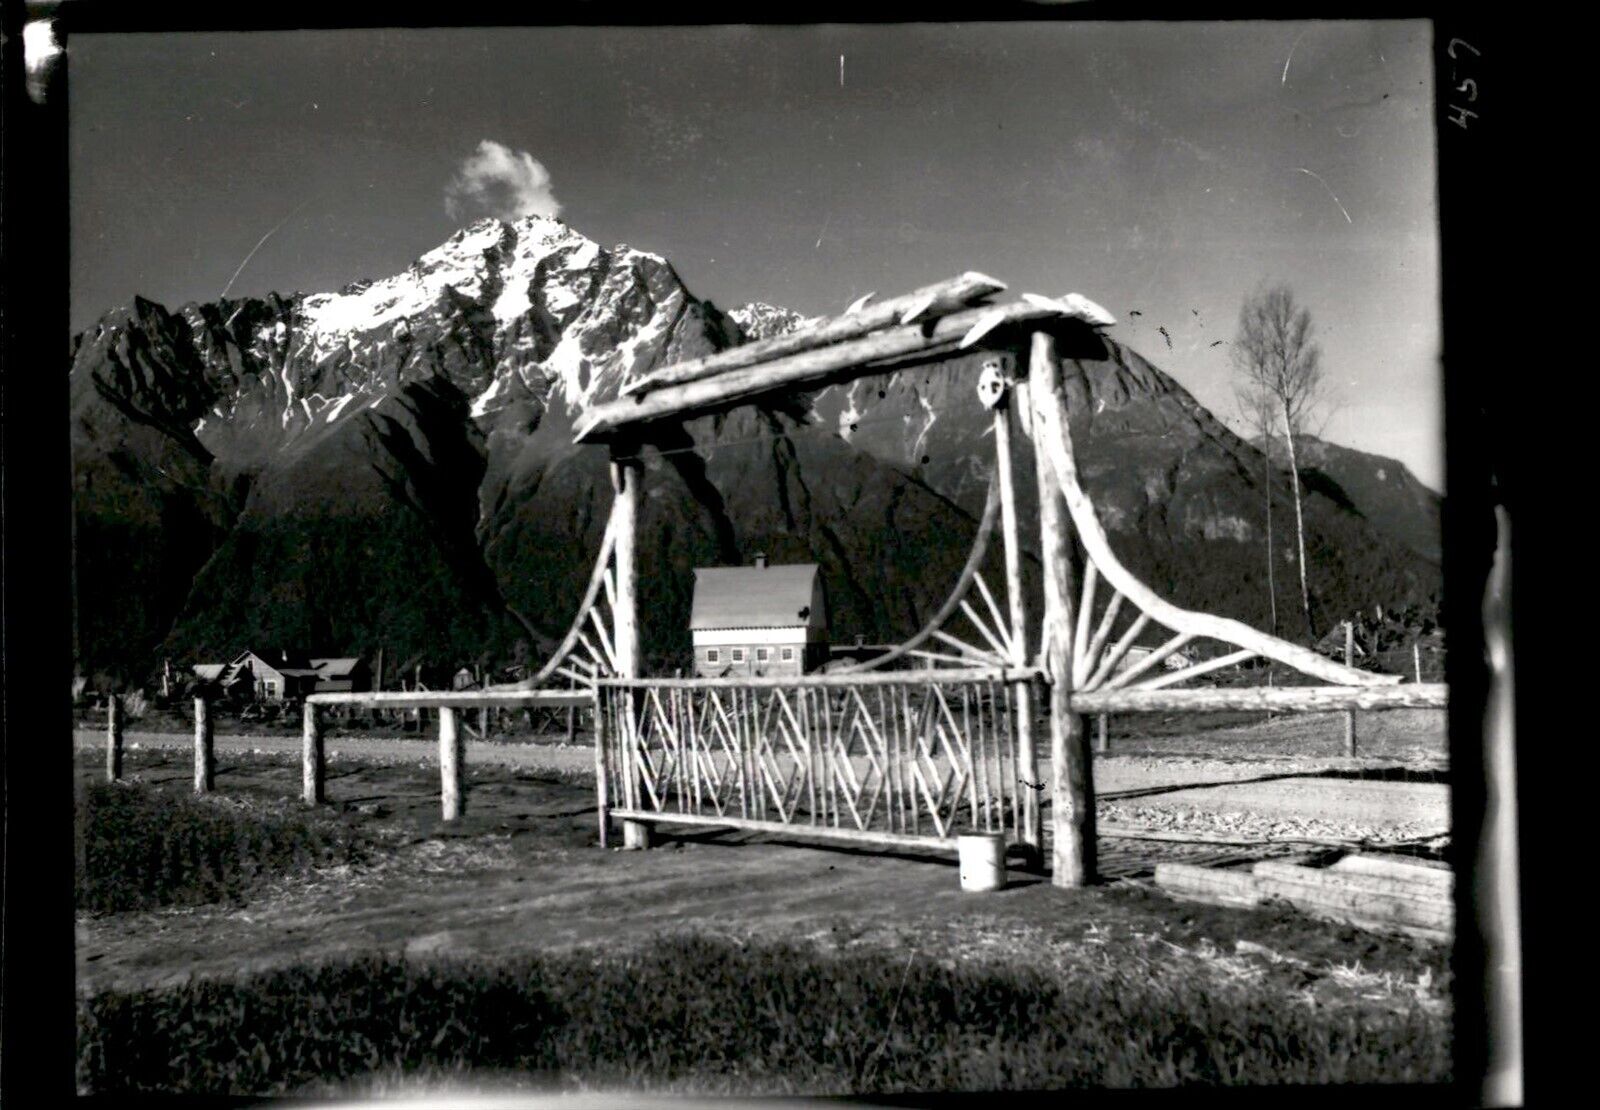 LG38 1935 2nd Gen Photo AMERICAN RANCH HOME AT BASE OF ALASKAN MOUNTAIN RANGE